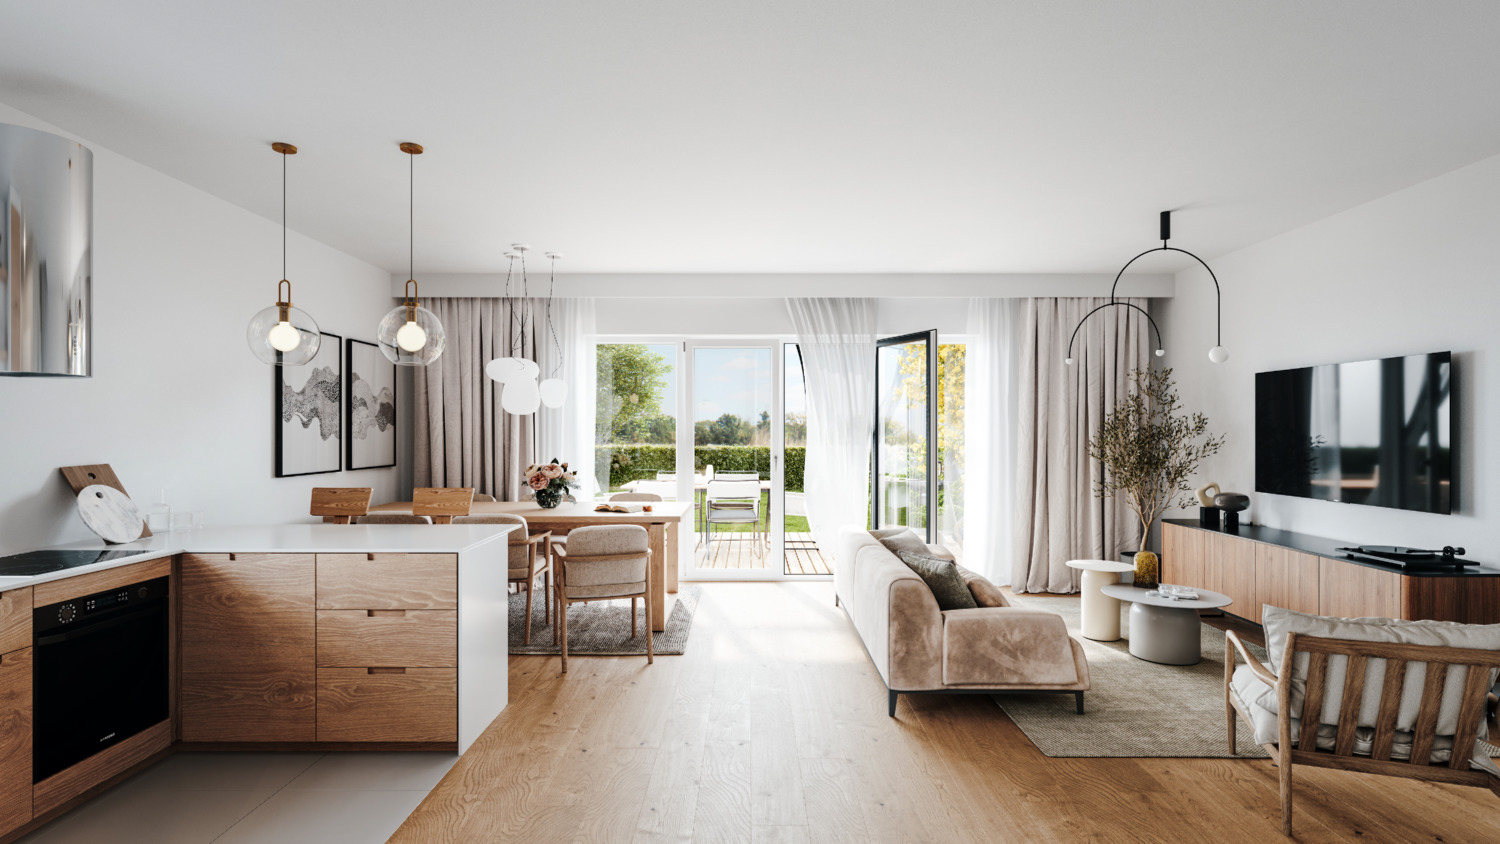 living room kitchen architectural visualization modern cozy interior desgin